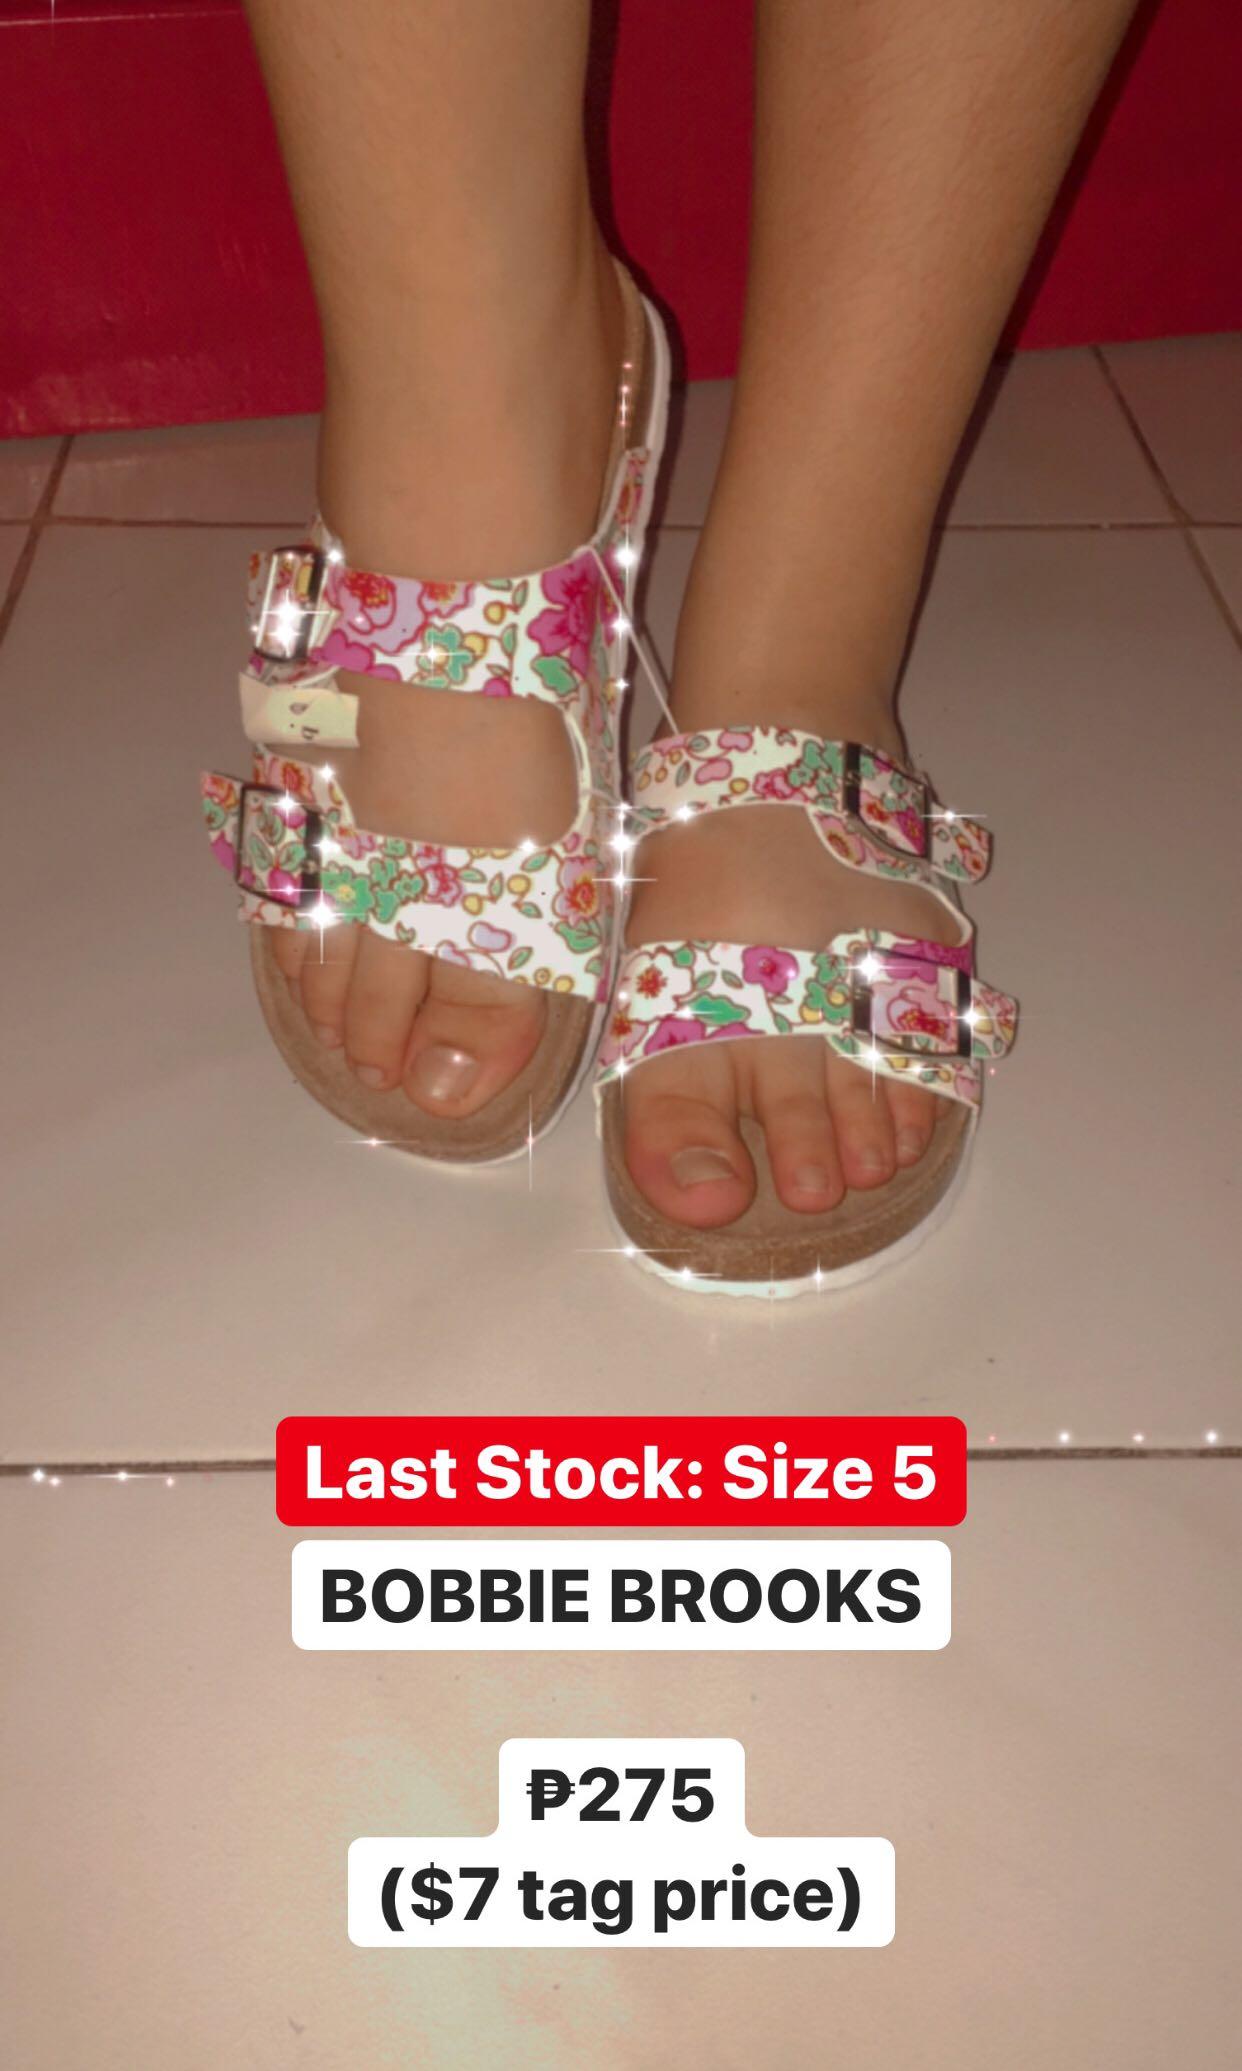 bobbie brooks boots